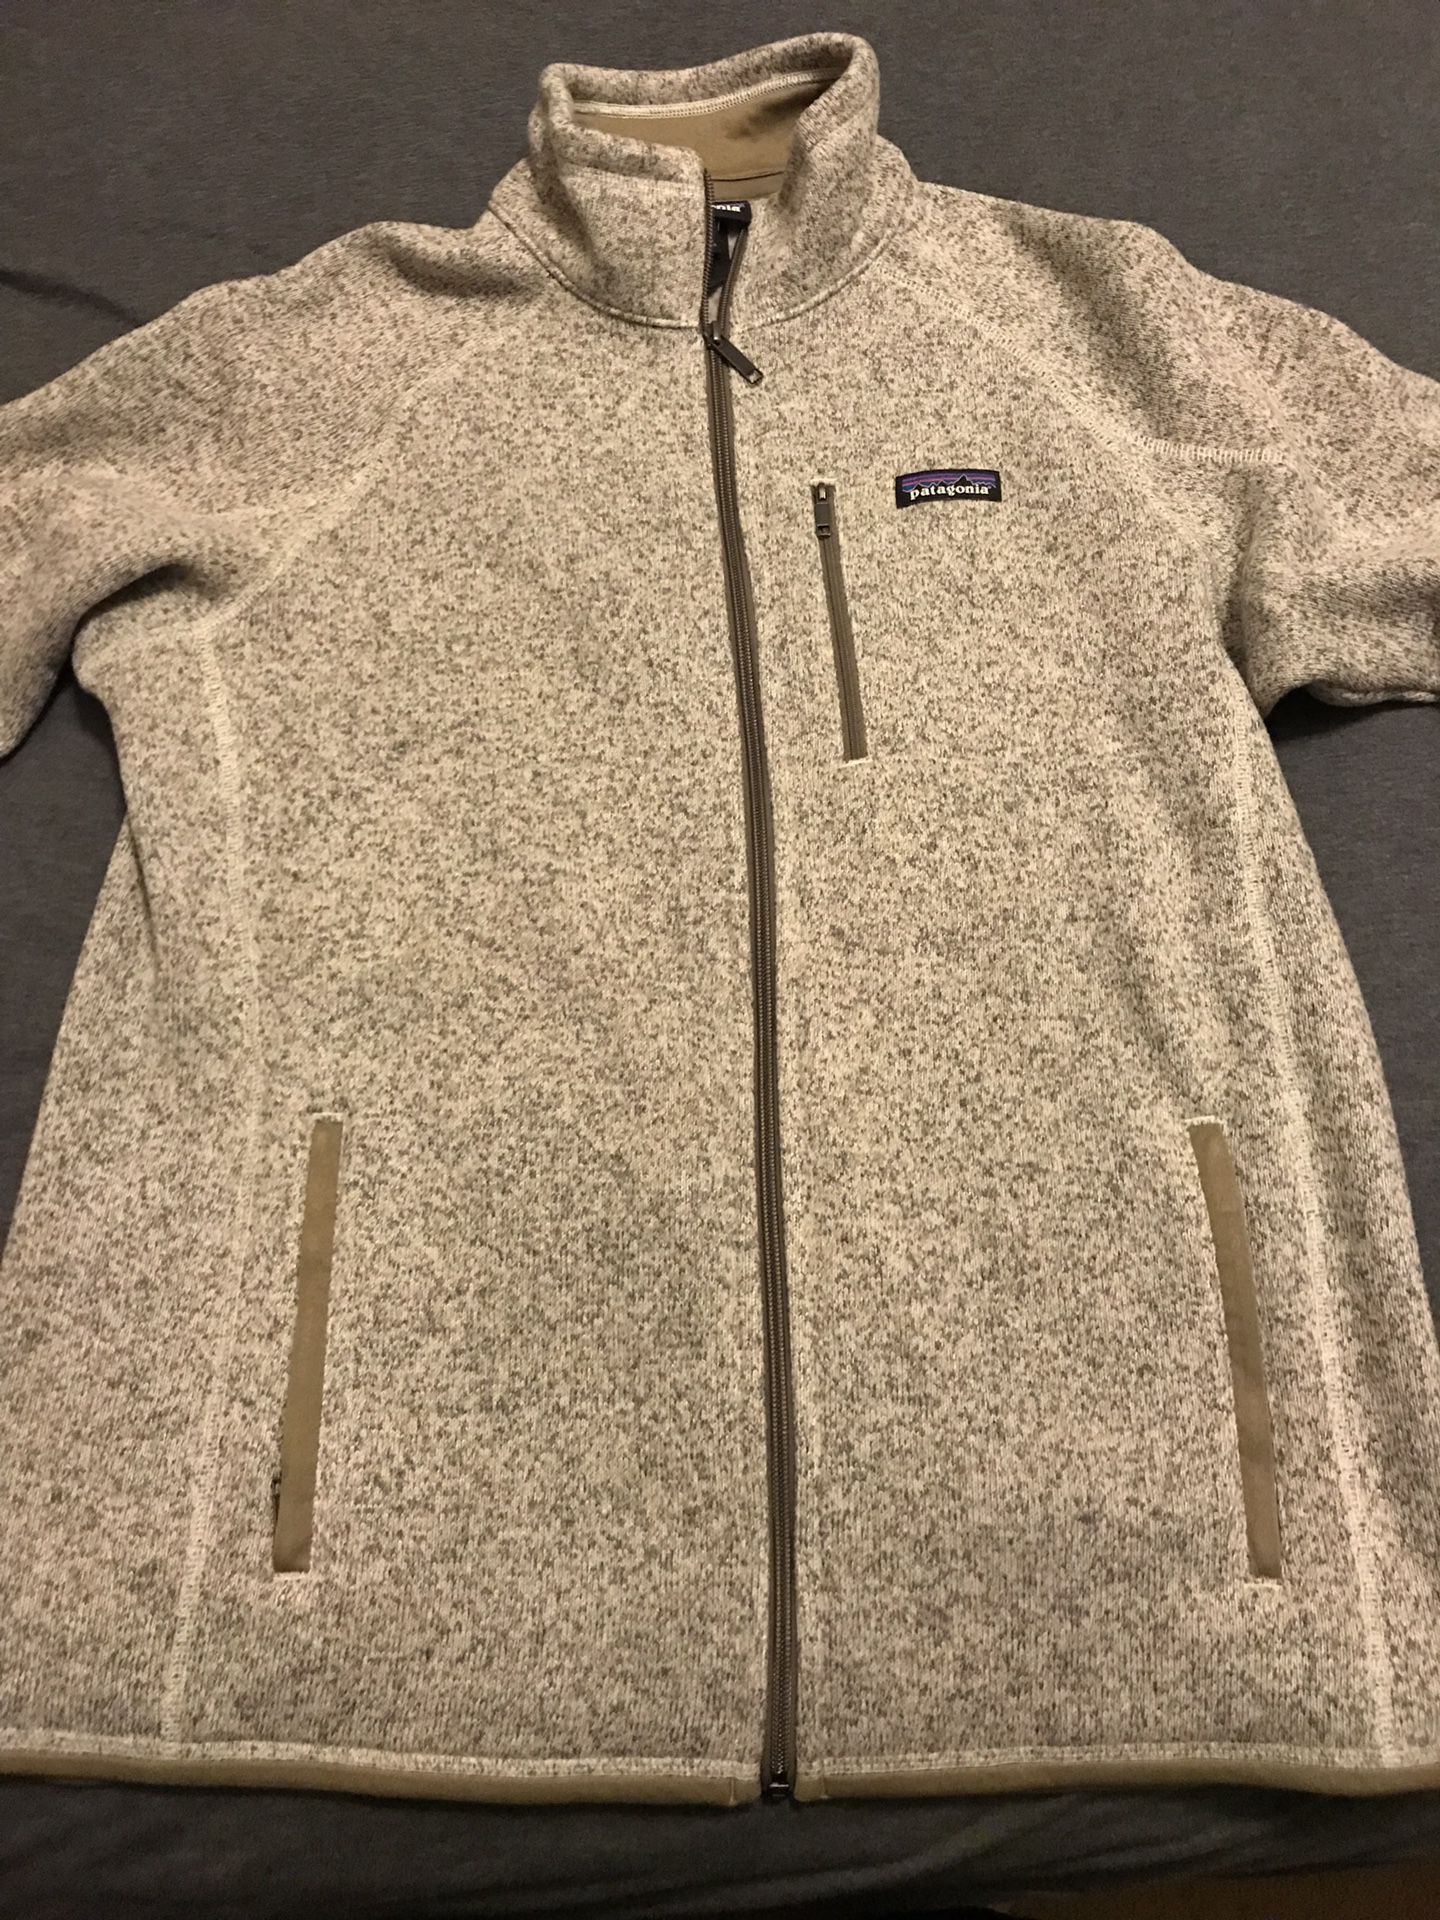 Patagonia Men’s Better Sweater Fleece Jacket - Bleached Stone - Size L